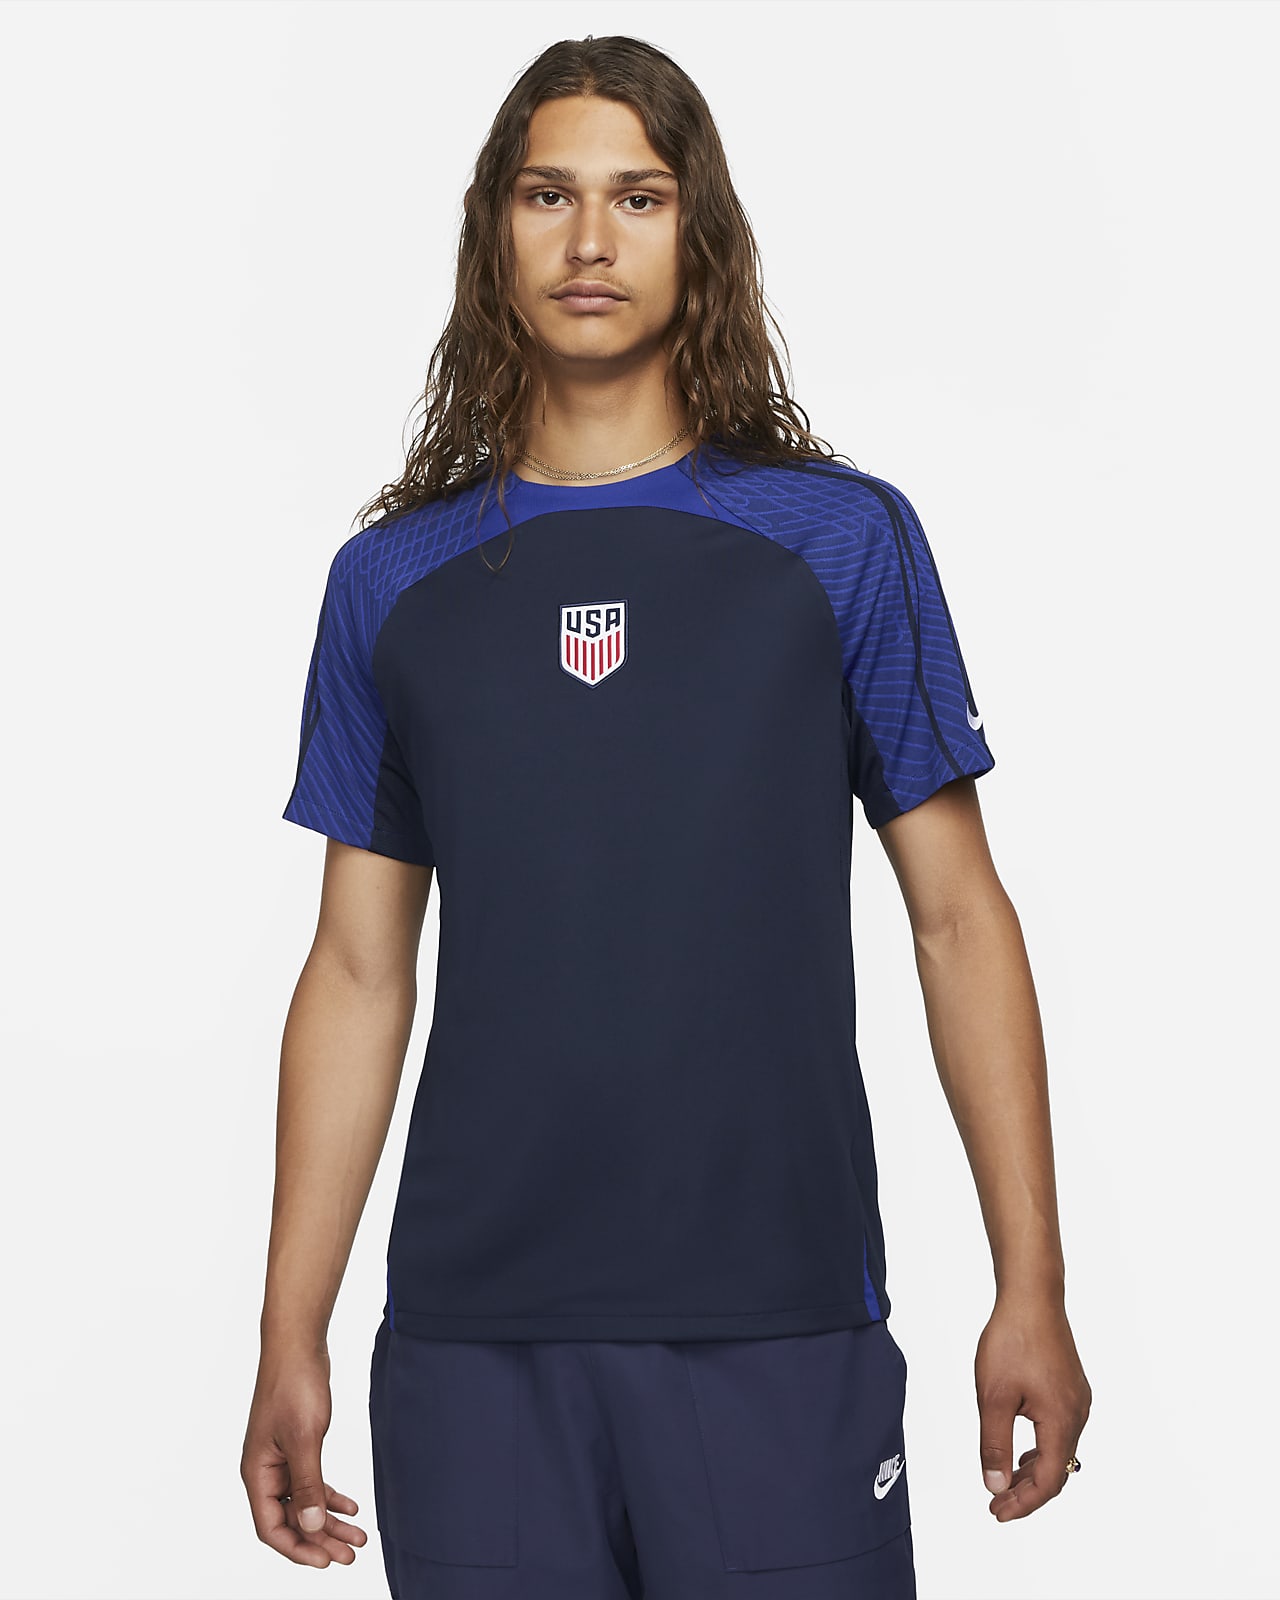 U.S. Strike Nike Dri-FIT Short-Sleeve Top. Nike.com